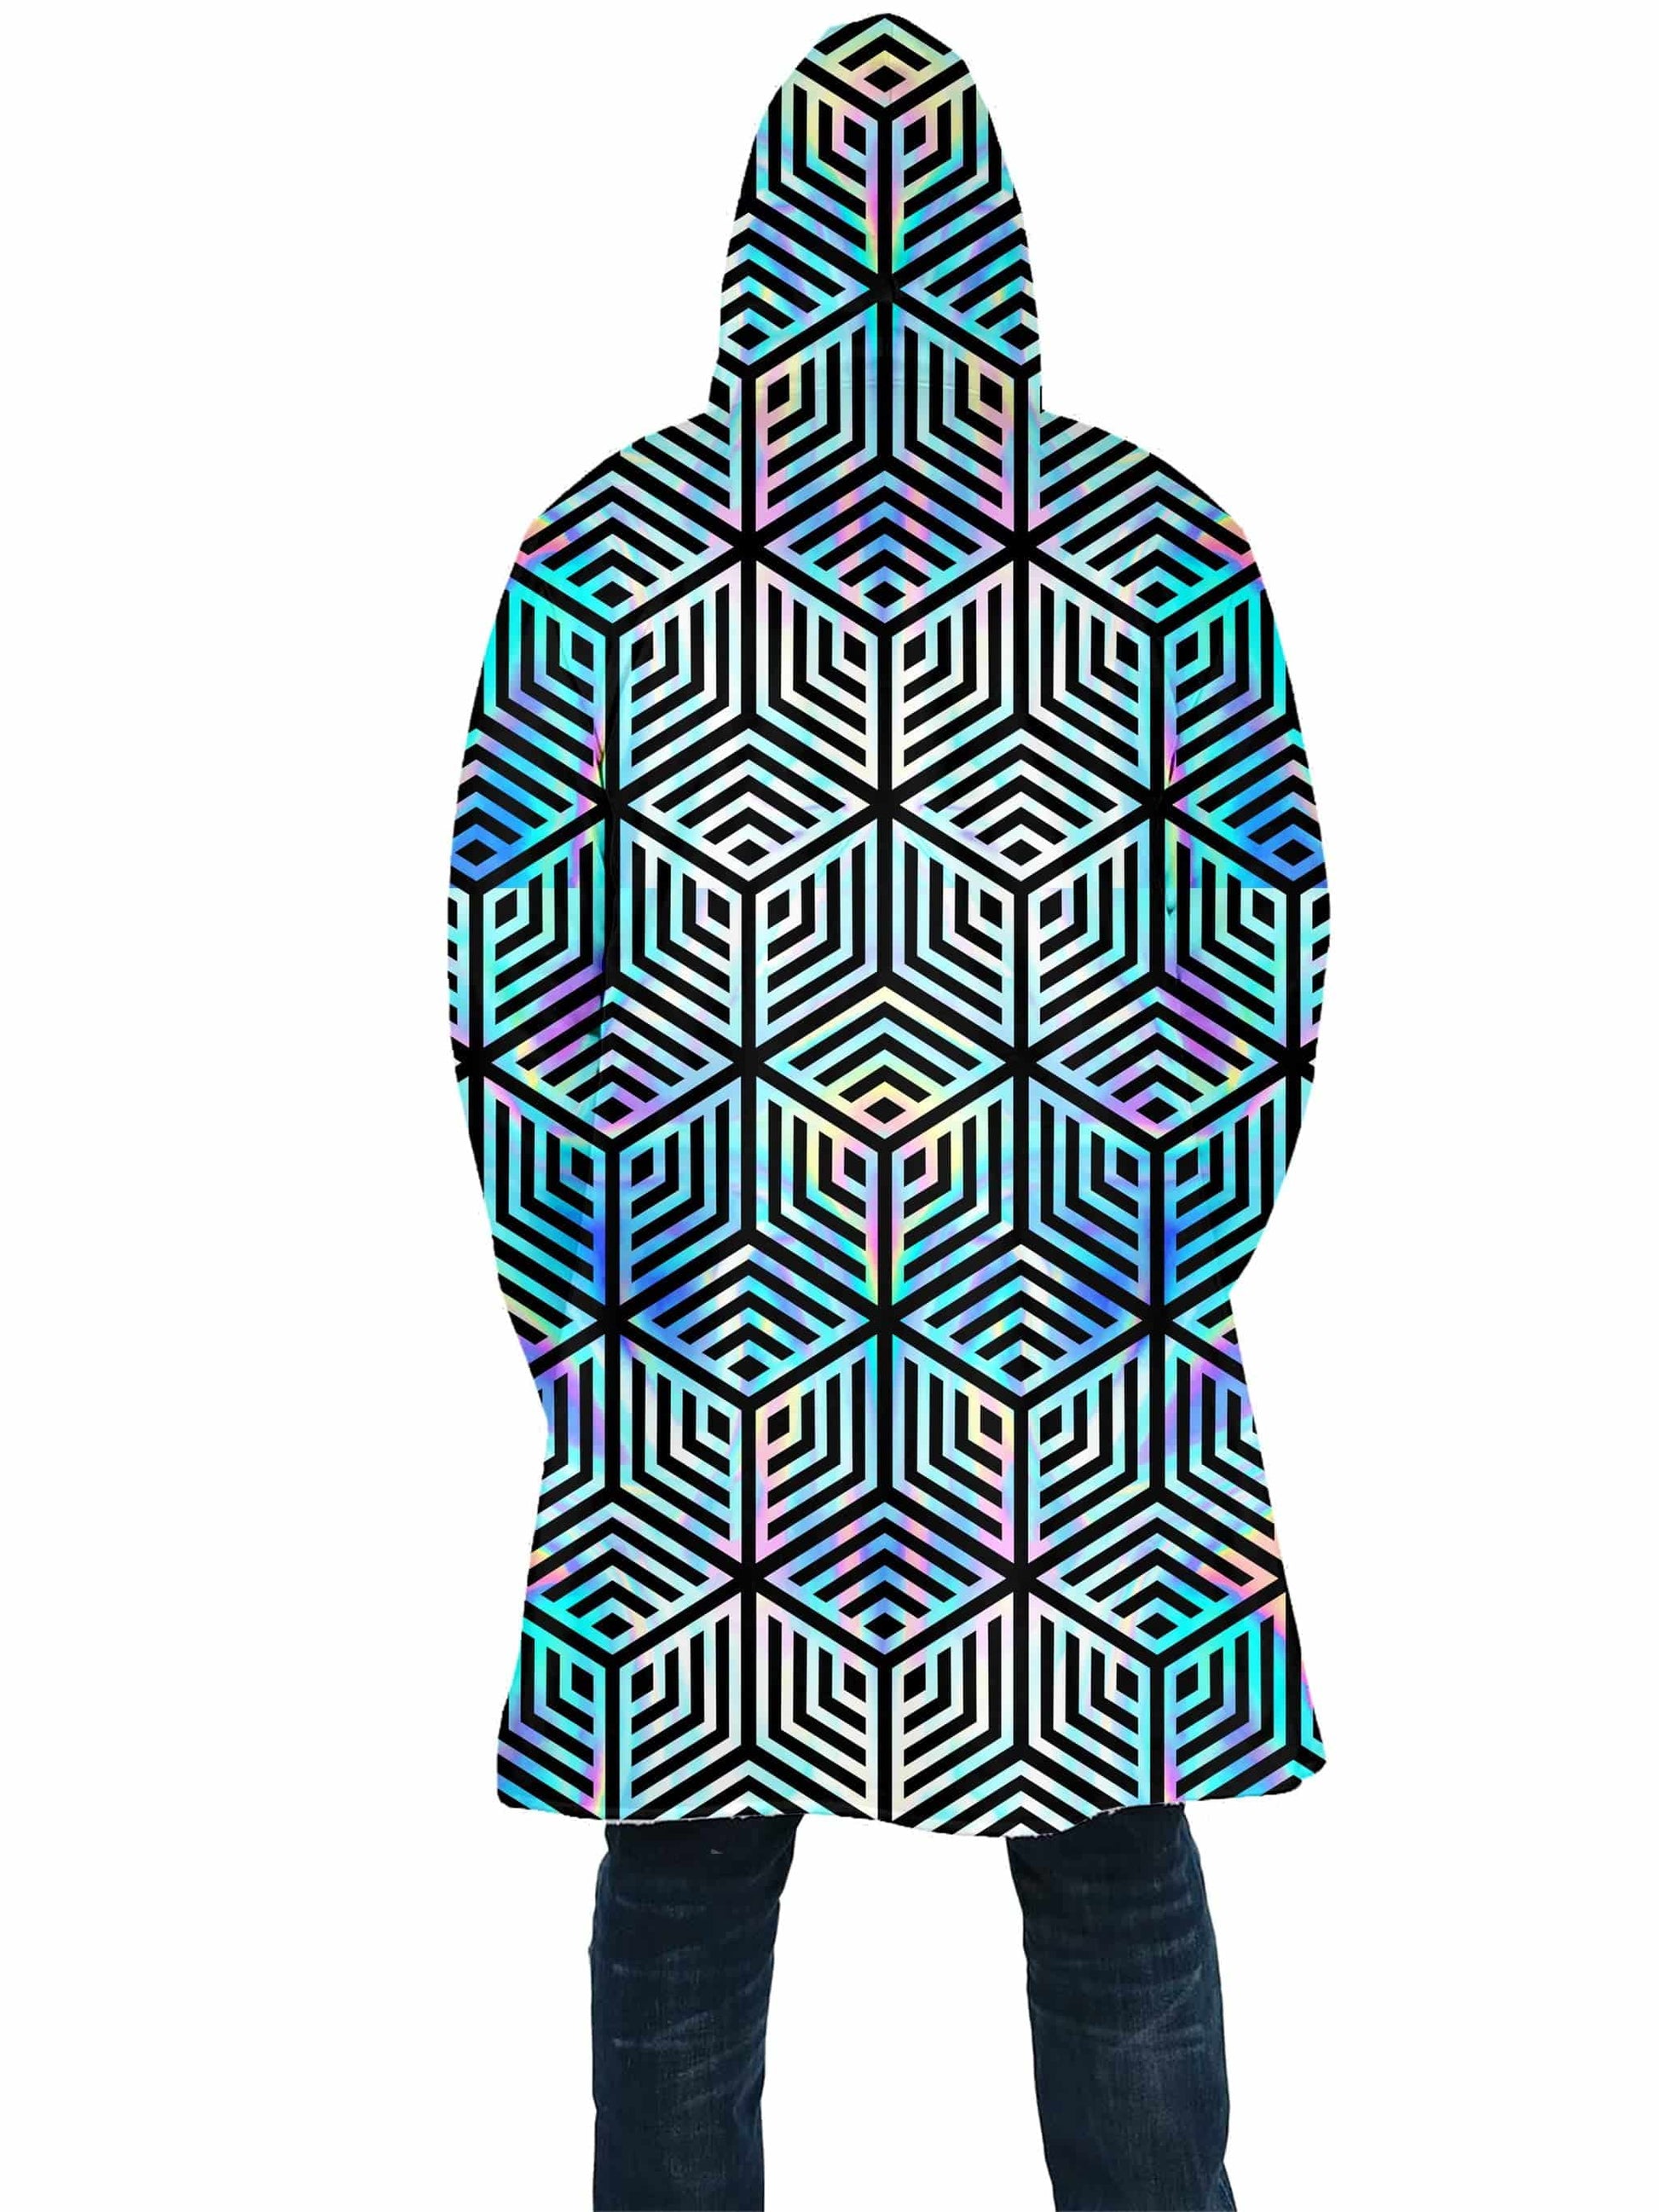 Holographic Hexagon Cloak, Noctum X Truth, | iEDM